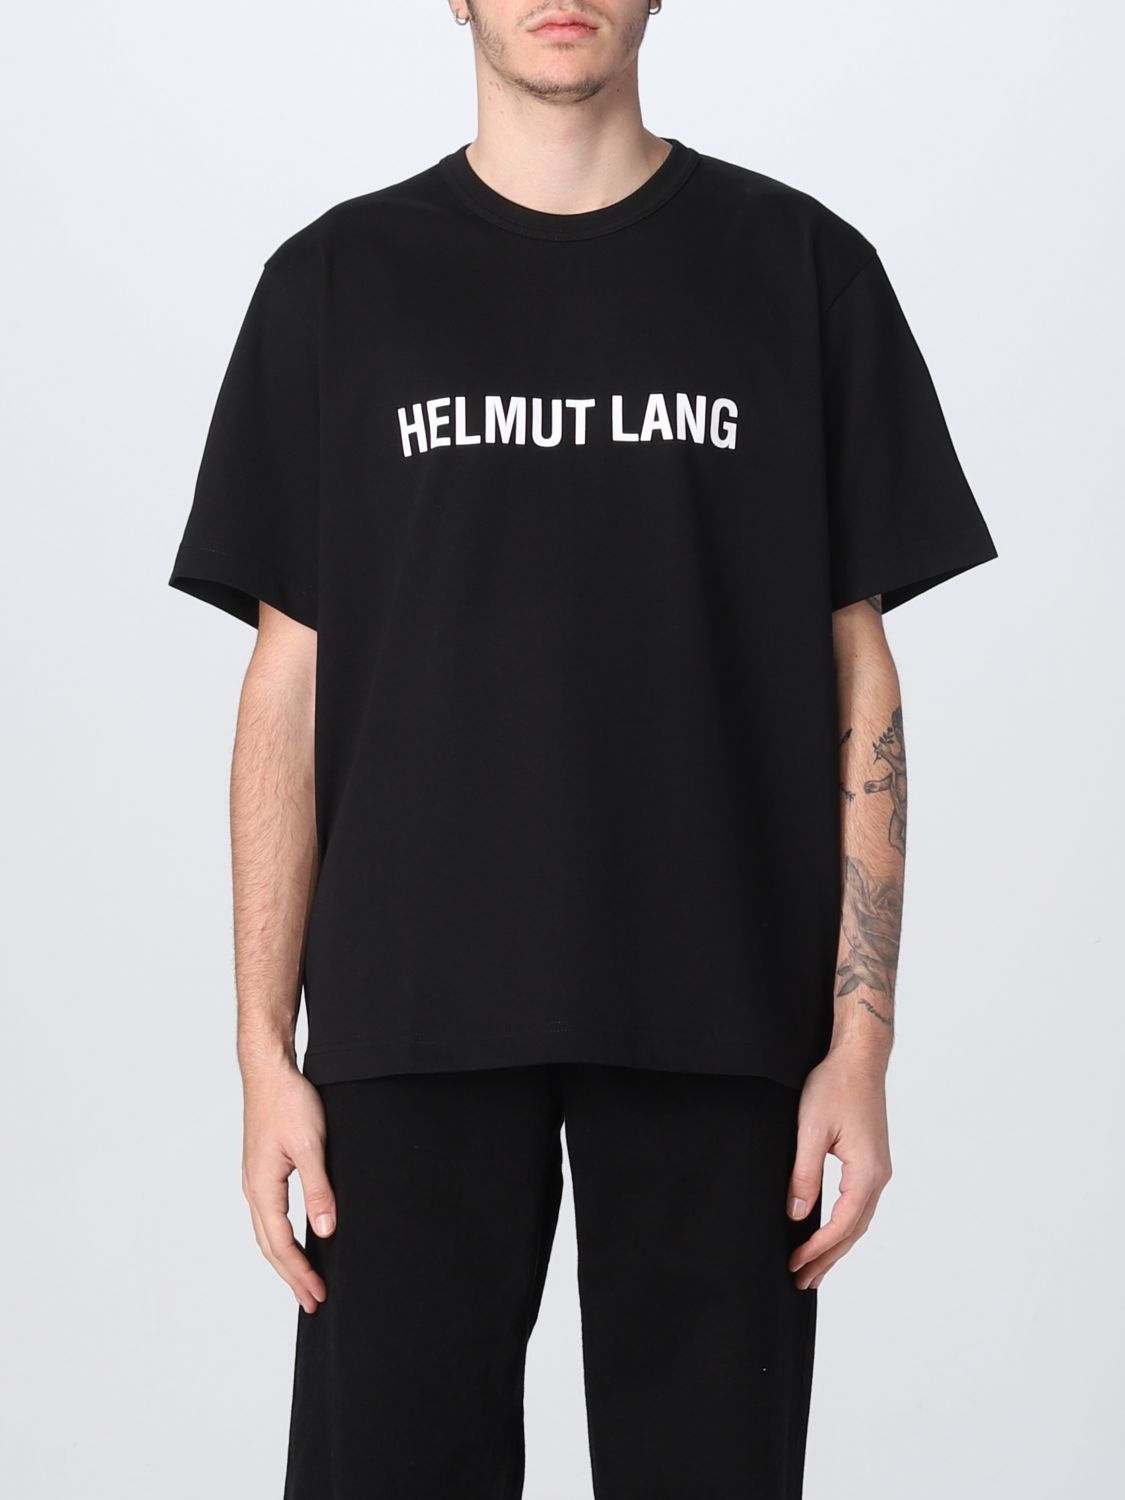 Lionel Green Street Oxide Haalbaar HELMUT LANG: t-shirt for man - Black | Helmut Lang t-shirt L09HM523 online  on GIGLIO.COM